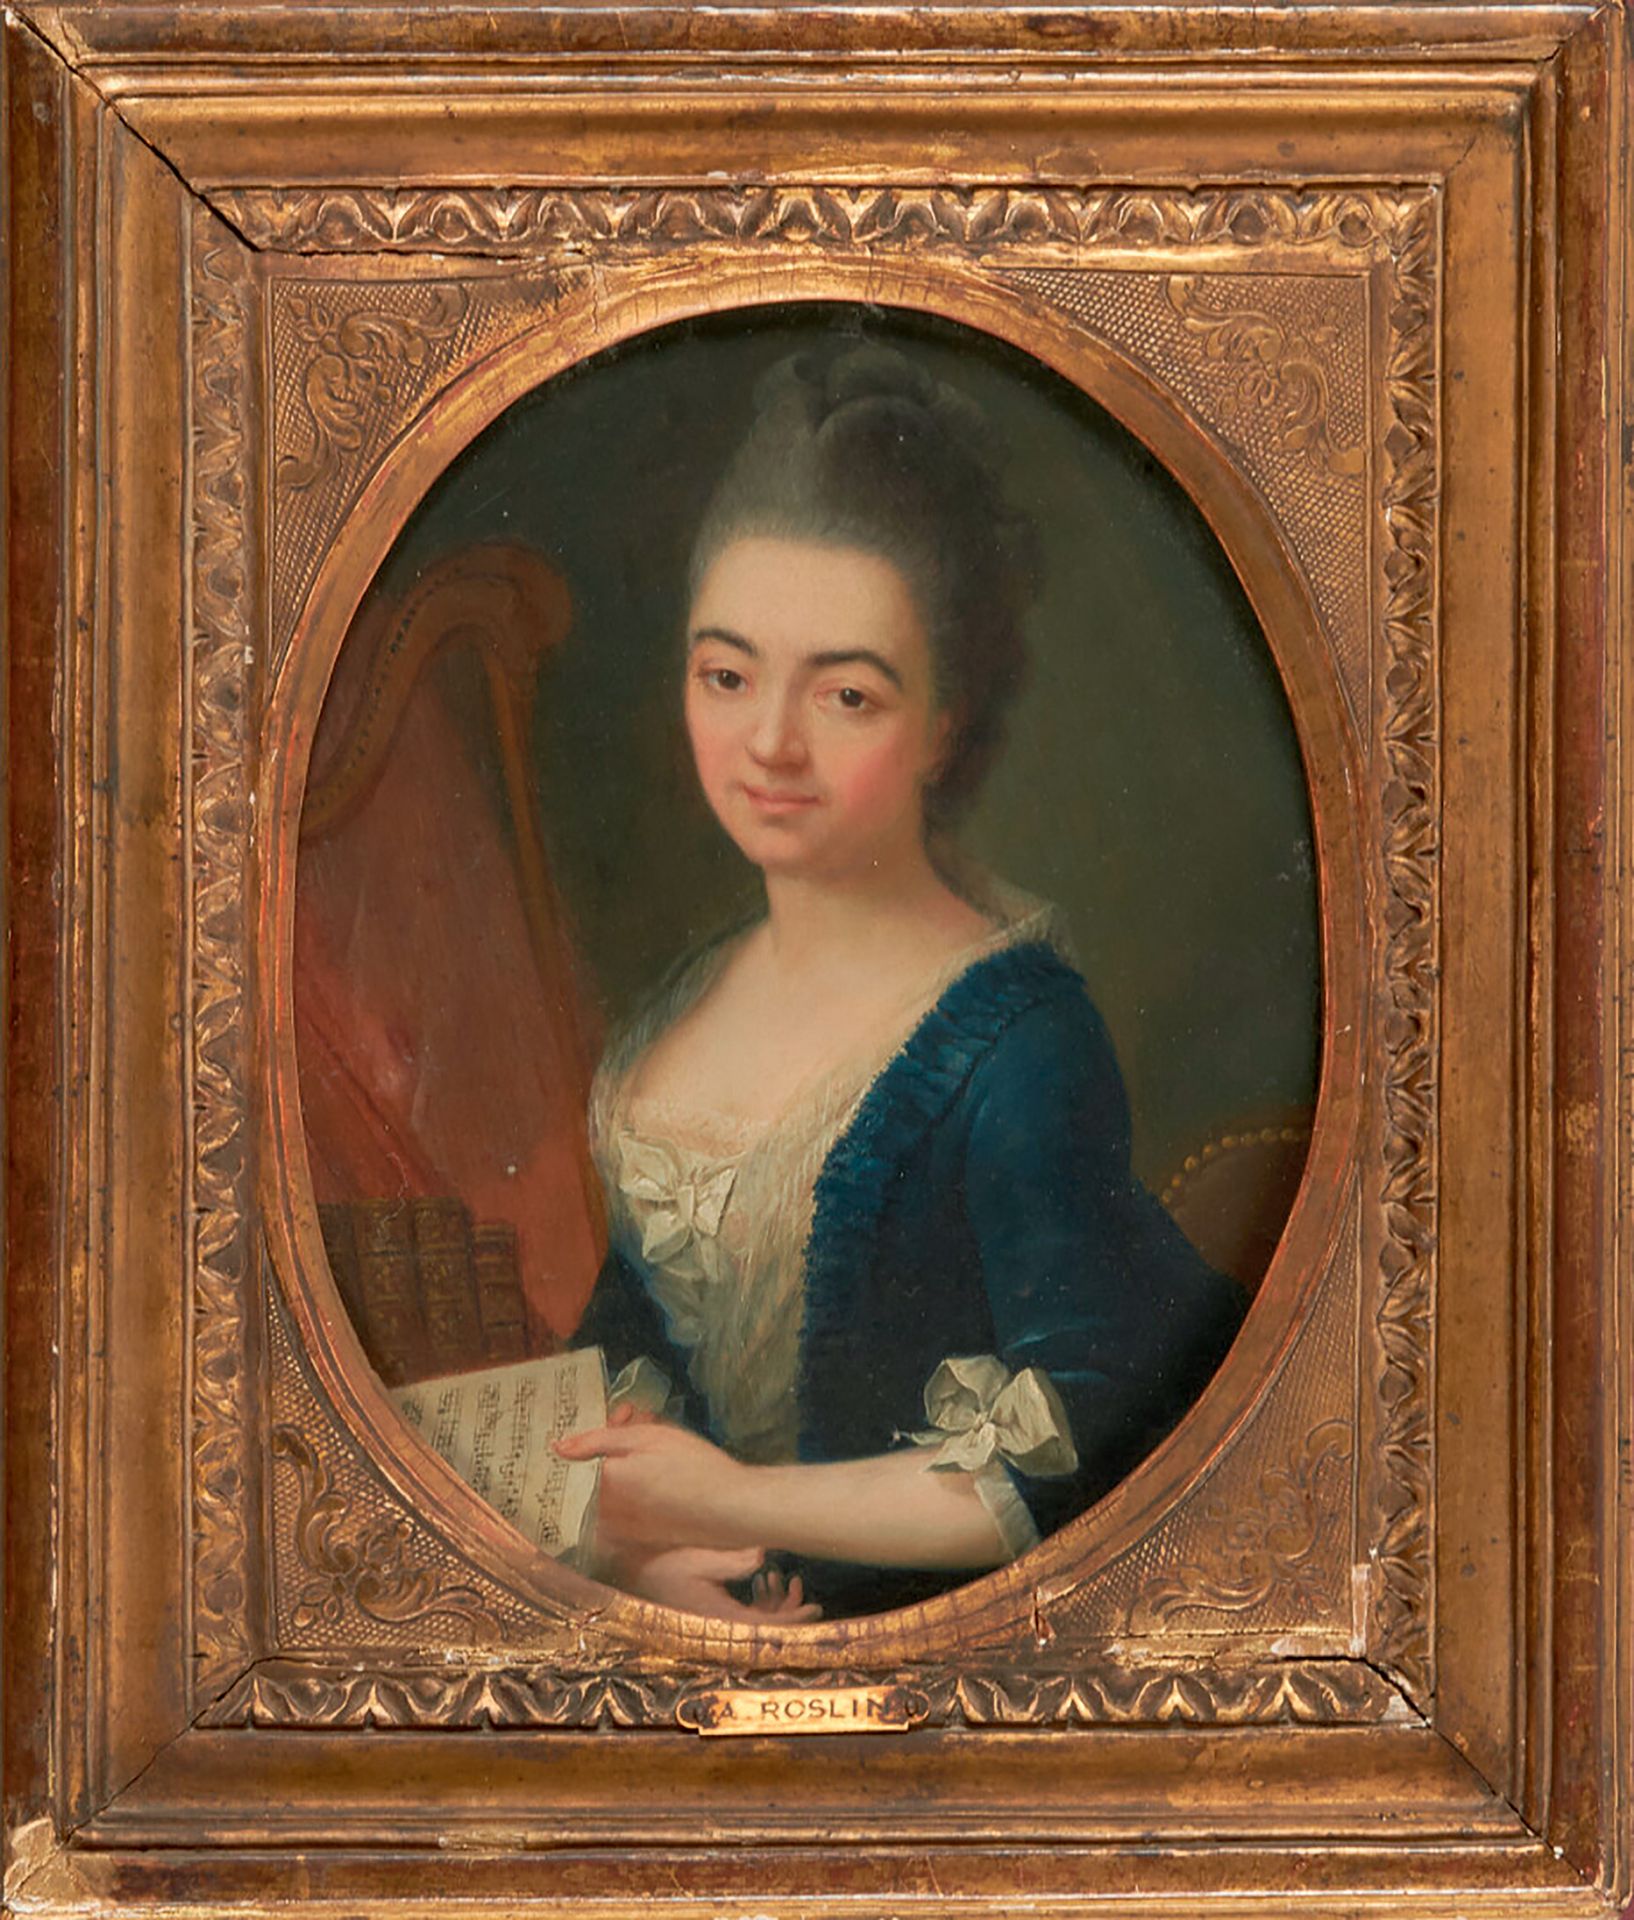 Ecole Française du XVIIIème siècle 手持竖琴的年轻女子肖像，手持乐谱
铜板上的油画
19.5 x 15.5 cm